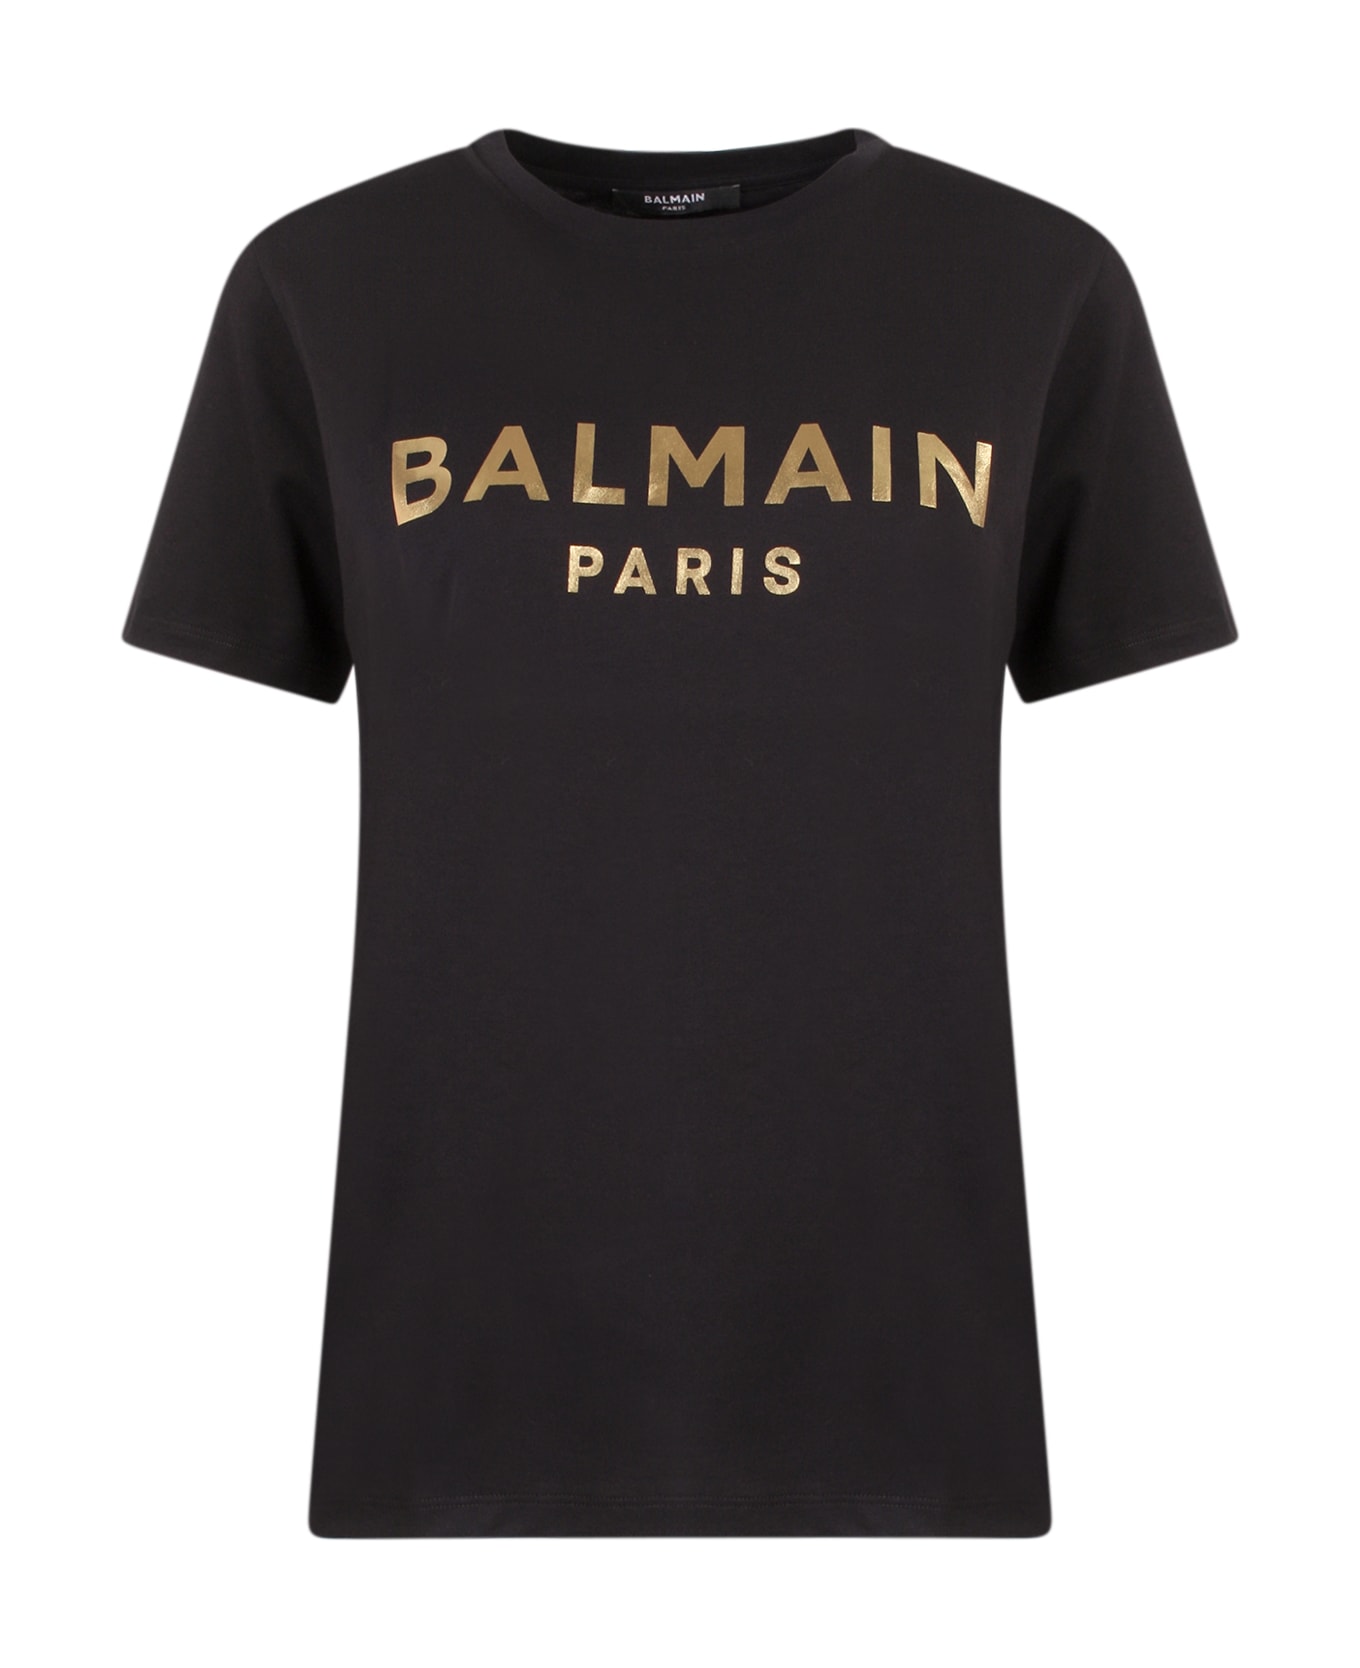 Balmain T-shirt - NOIR/OR